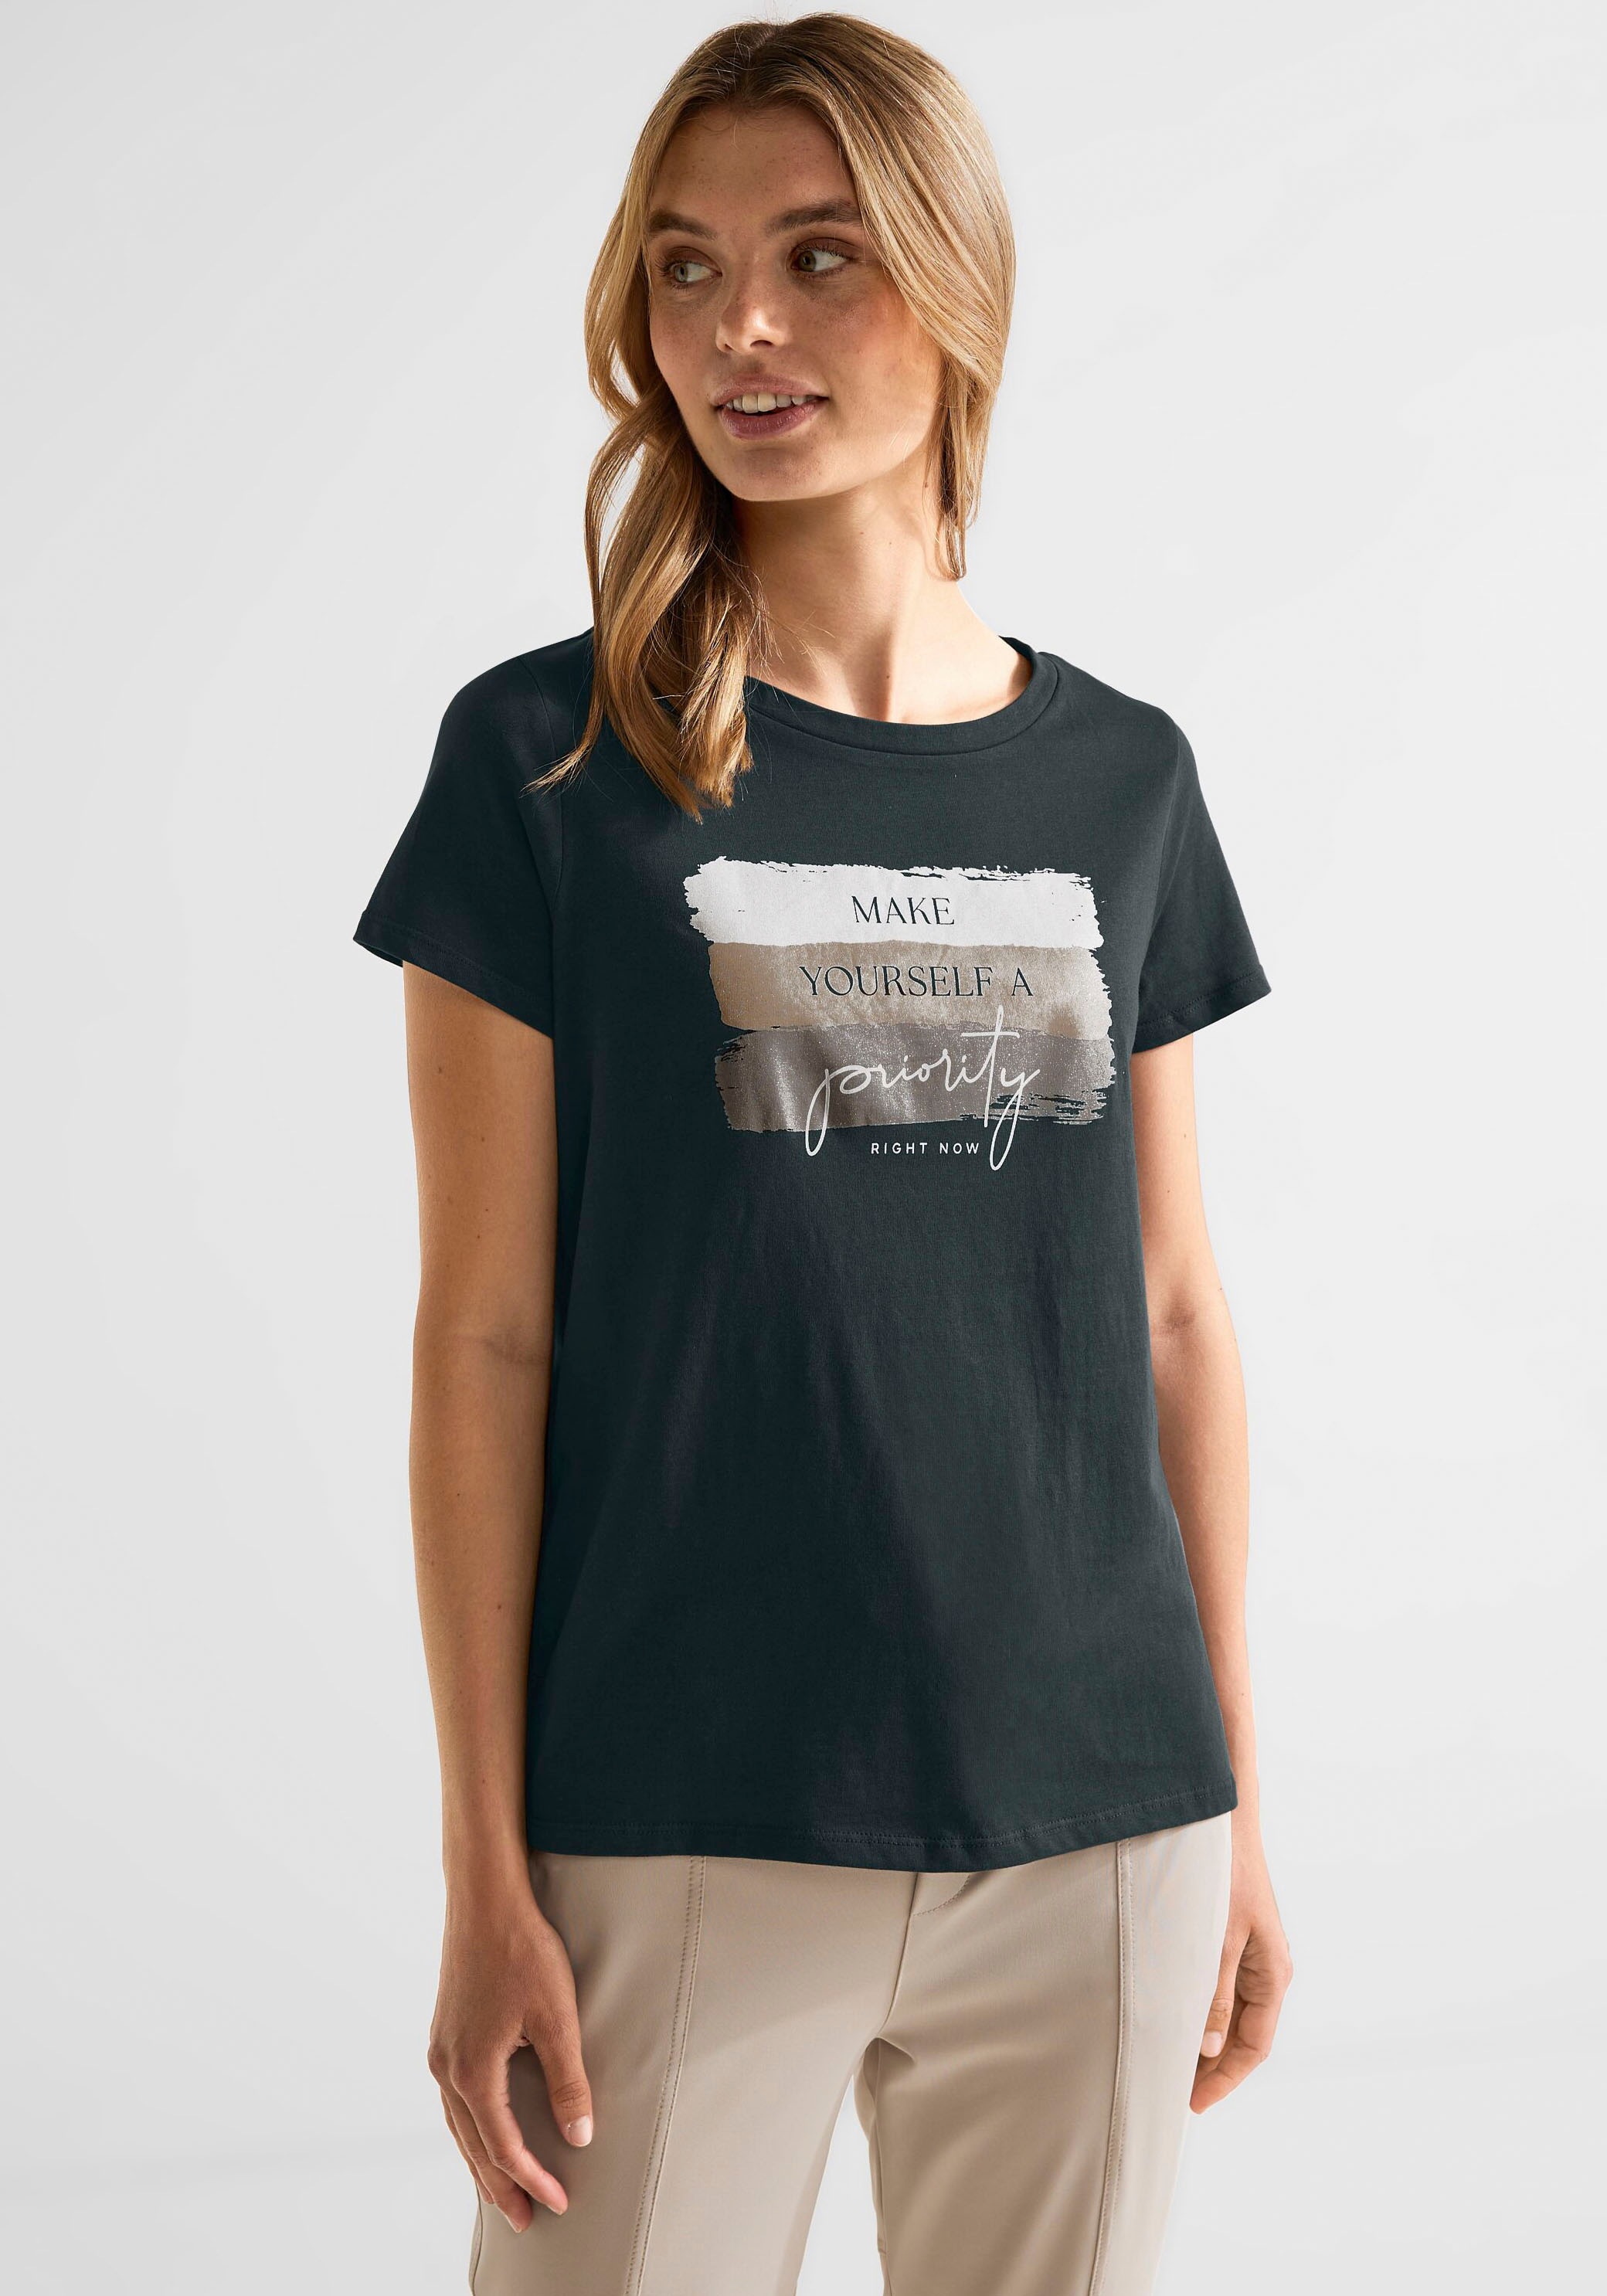 ONE hüftlangen T-Shirt, STREET im bestellen Schnitt online OTTO bei